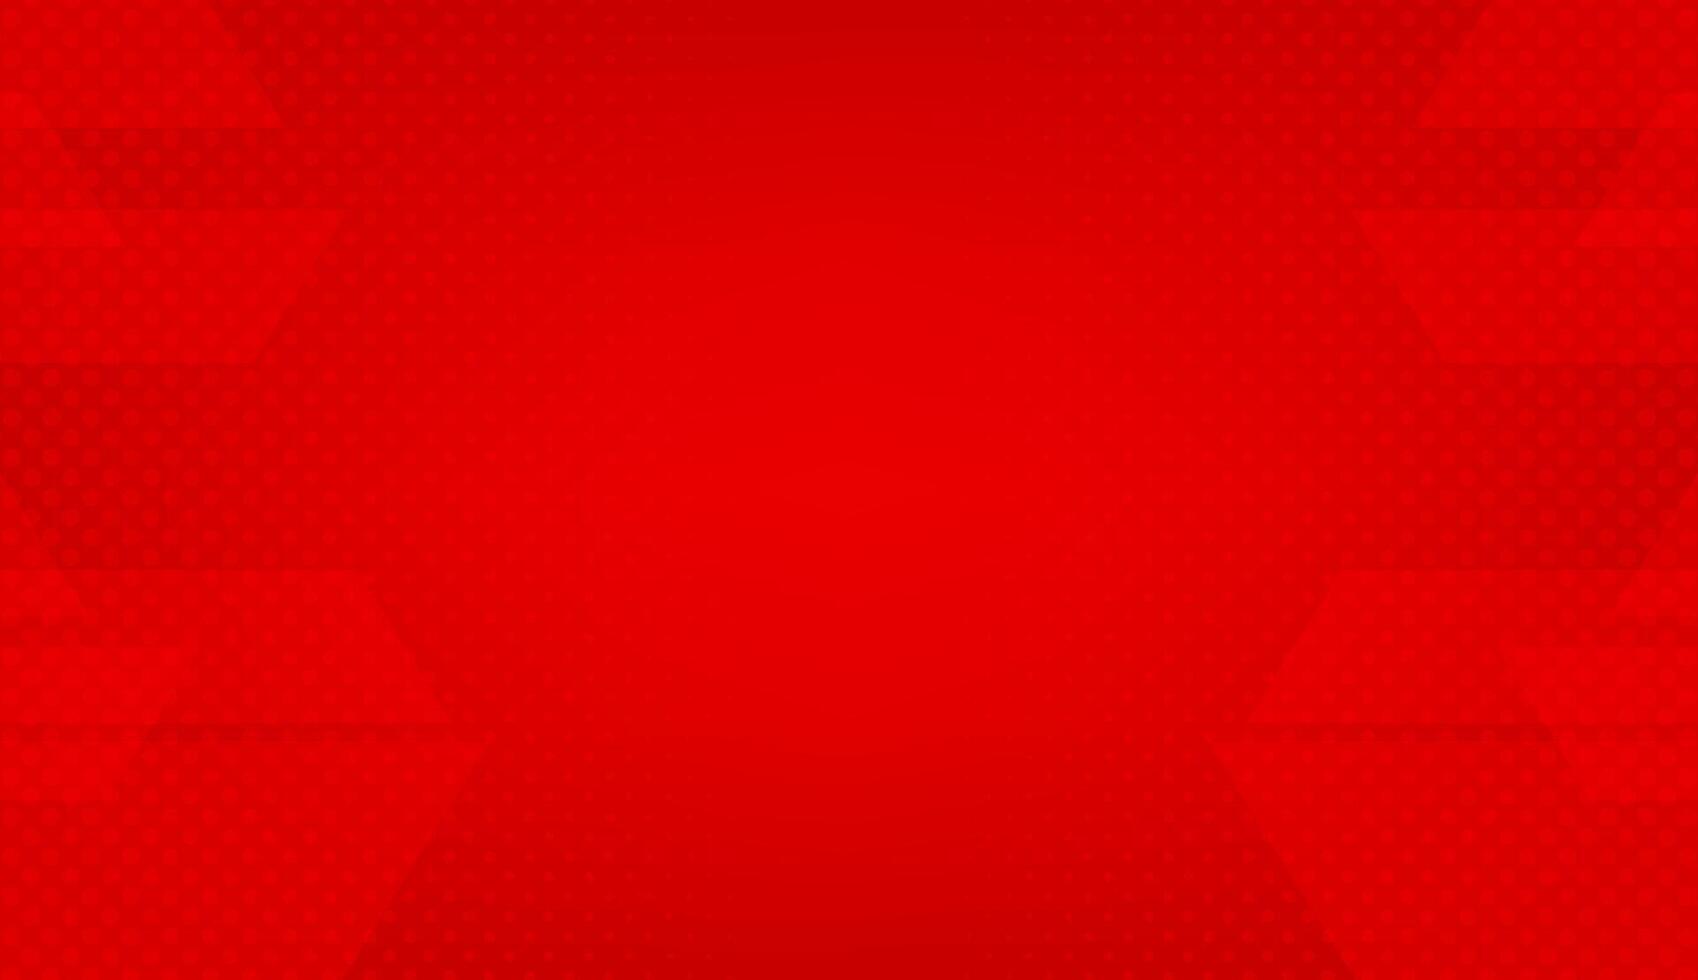 Red halftone background, vector illustration.